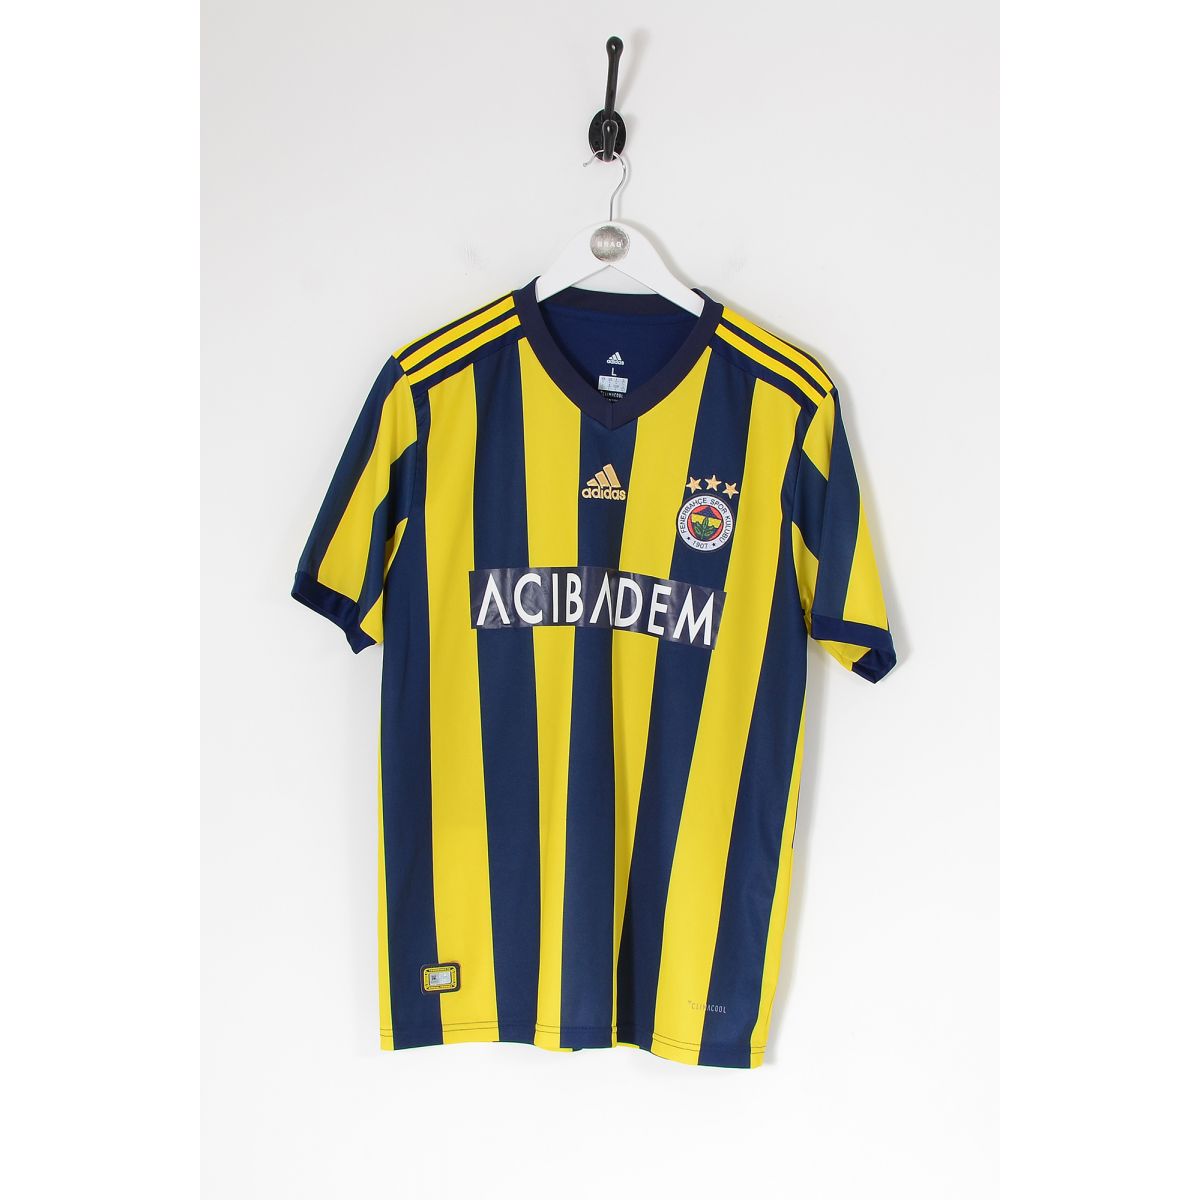 Vintage ADIDAS Fenerbahçe S.K. 2016-17 Kit Football Shirt Navy Blue Large